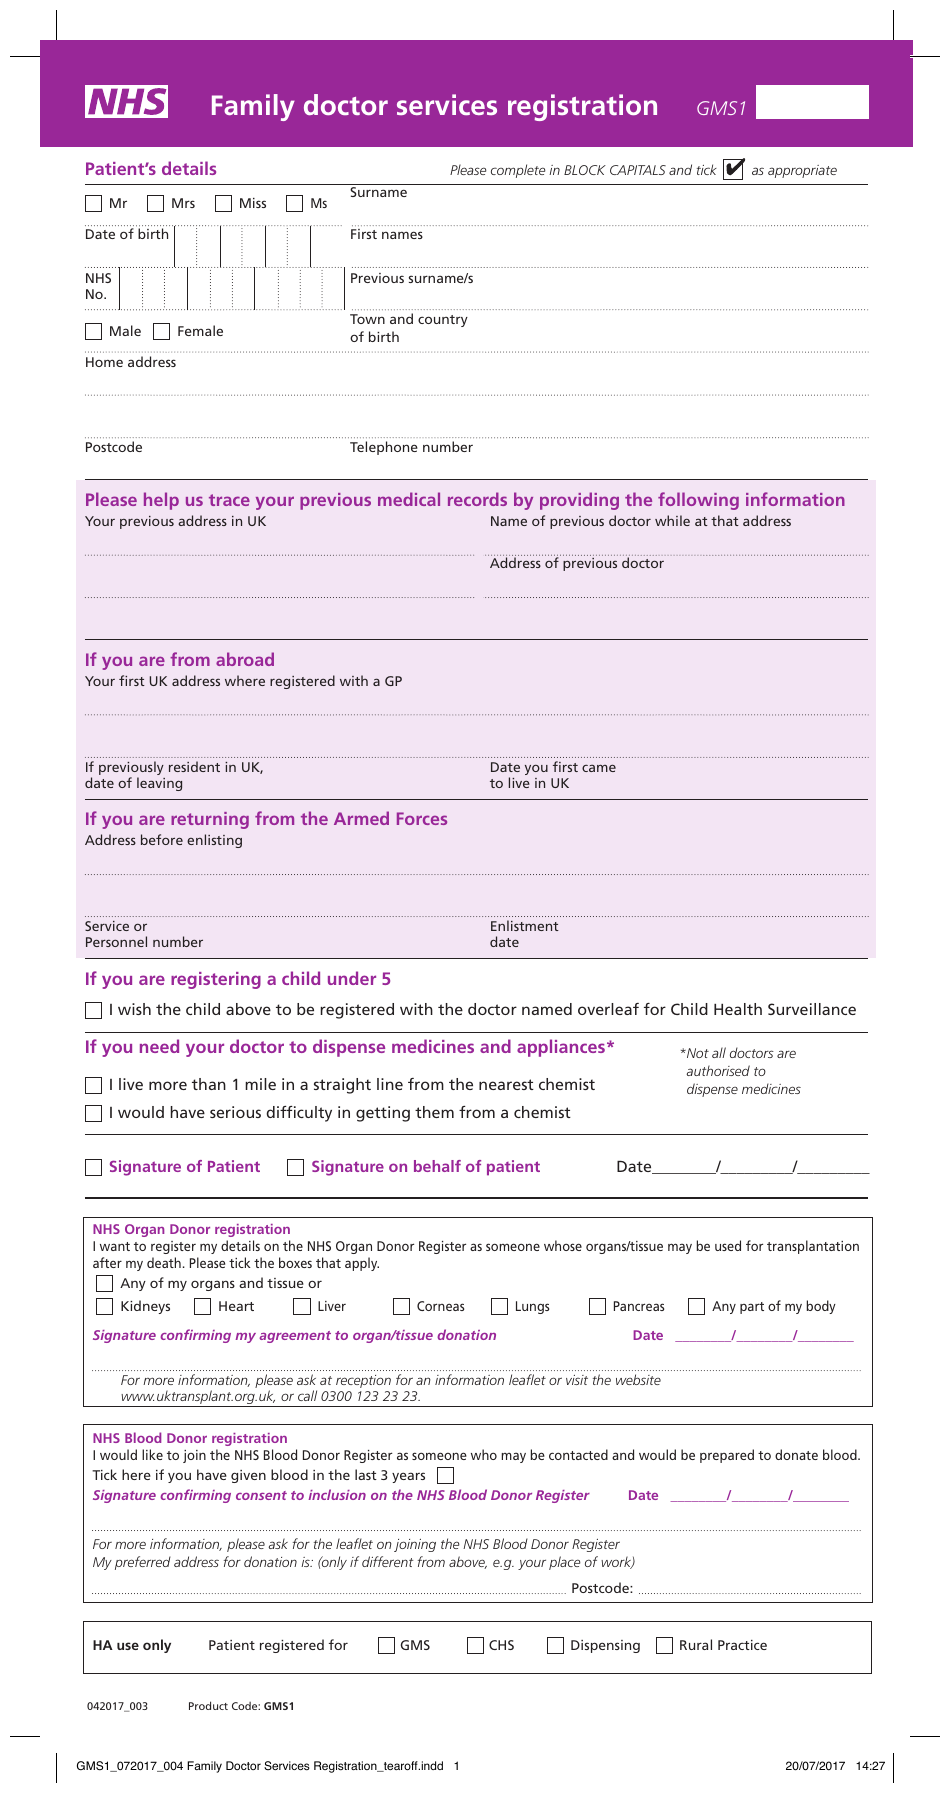 Form GMS1 Family Doctor Services Registration - United Kingdom, Page 1